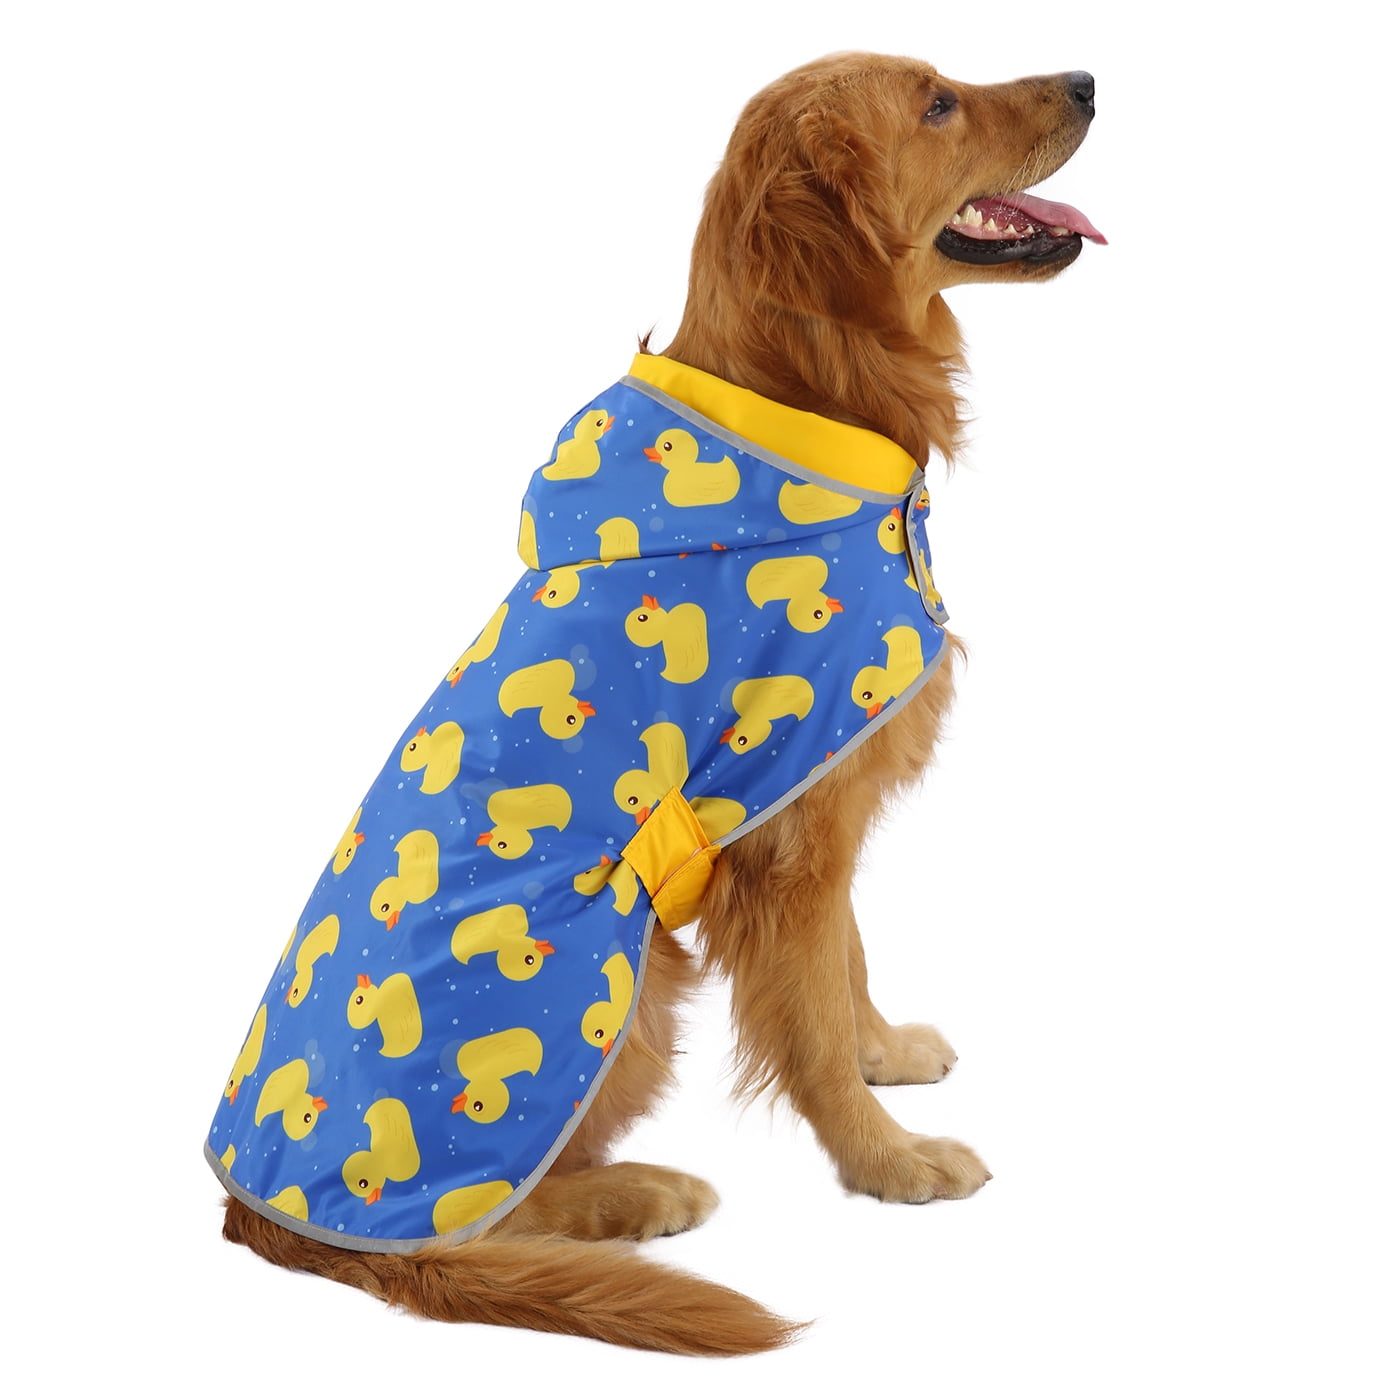 HDE Reversible Dog Raincoat Hooded Slicker Poncho Rain Coat Jacket for Small Medium Large Dogs Buffalo Plaid/Red, M